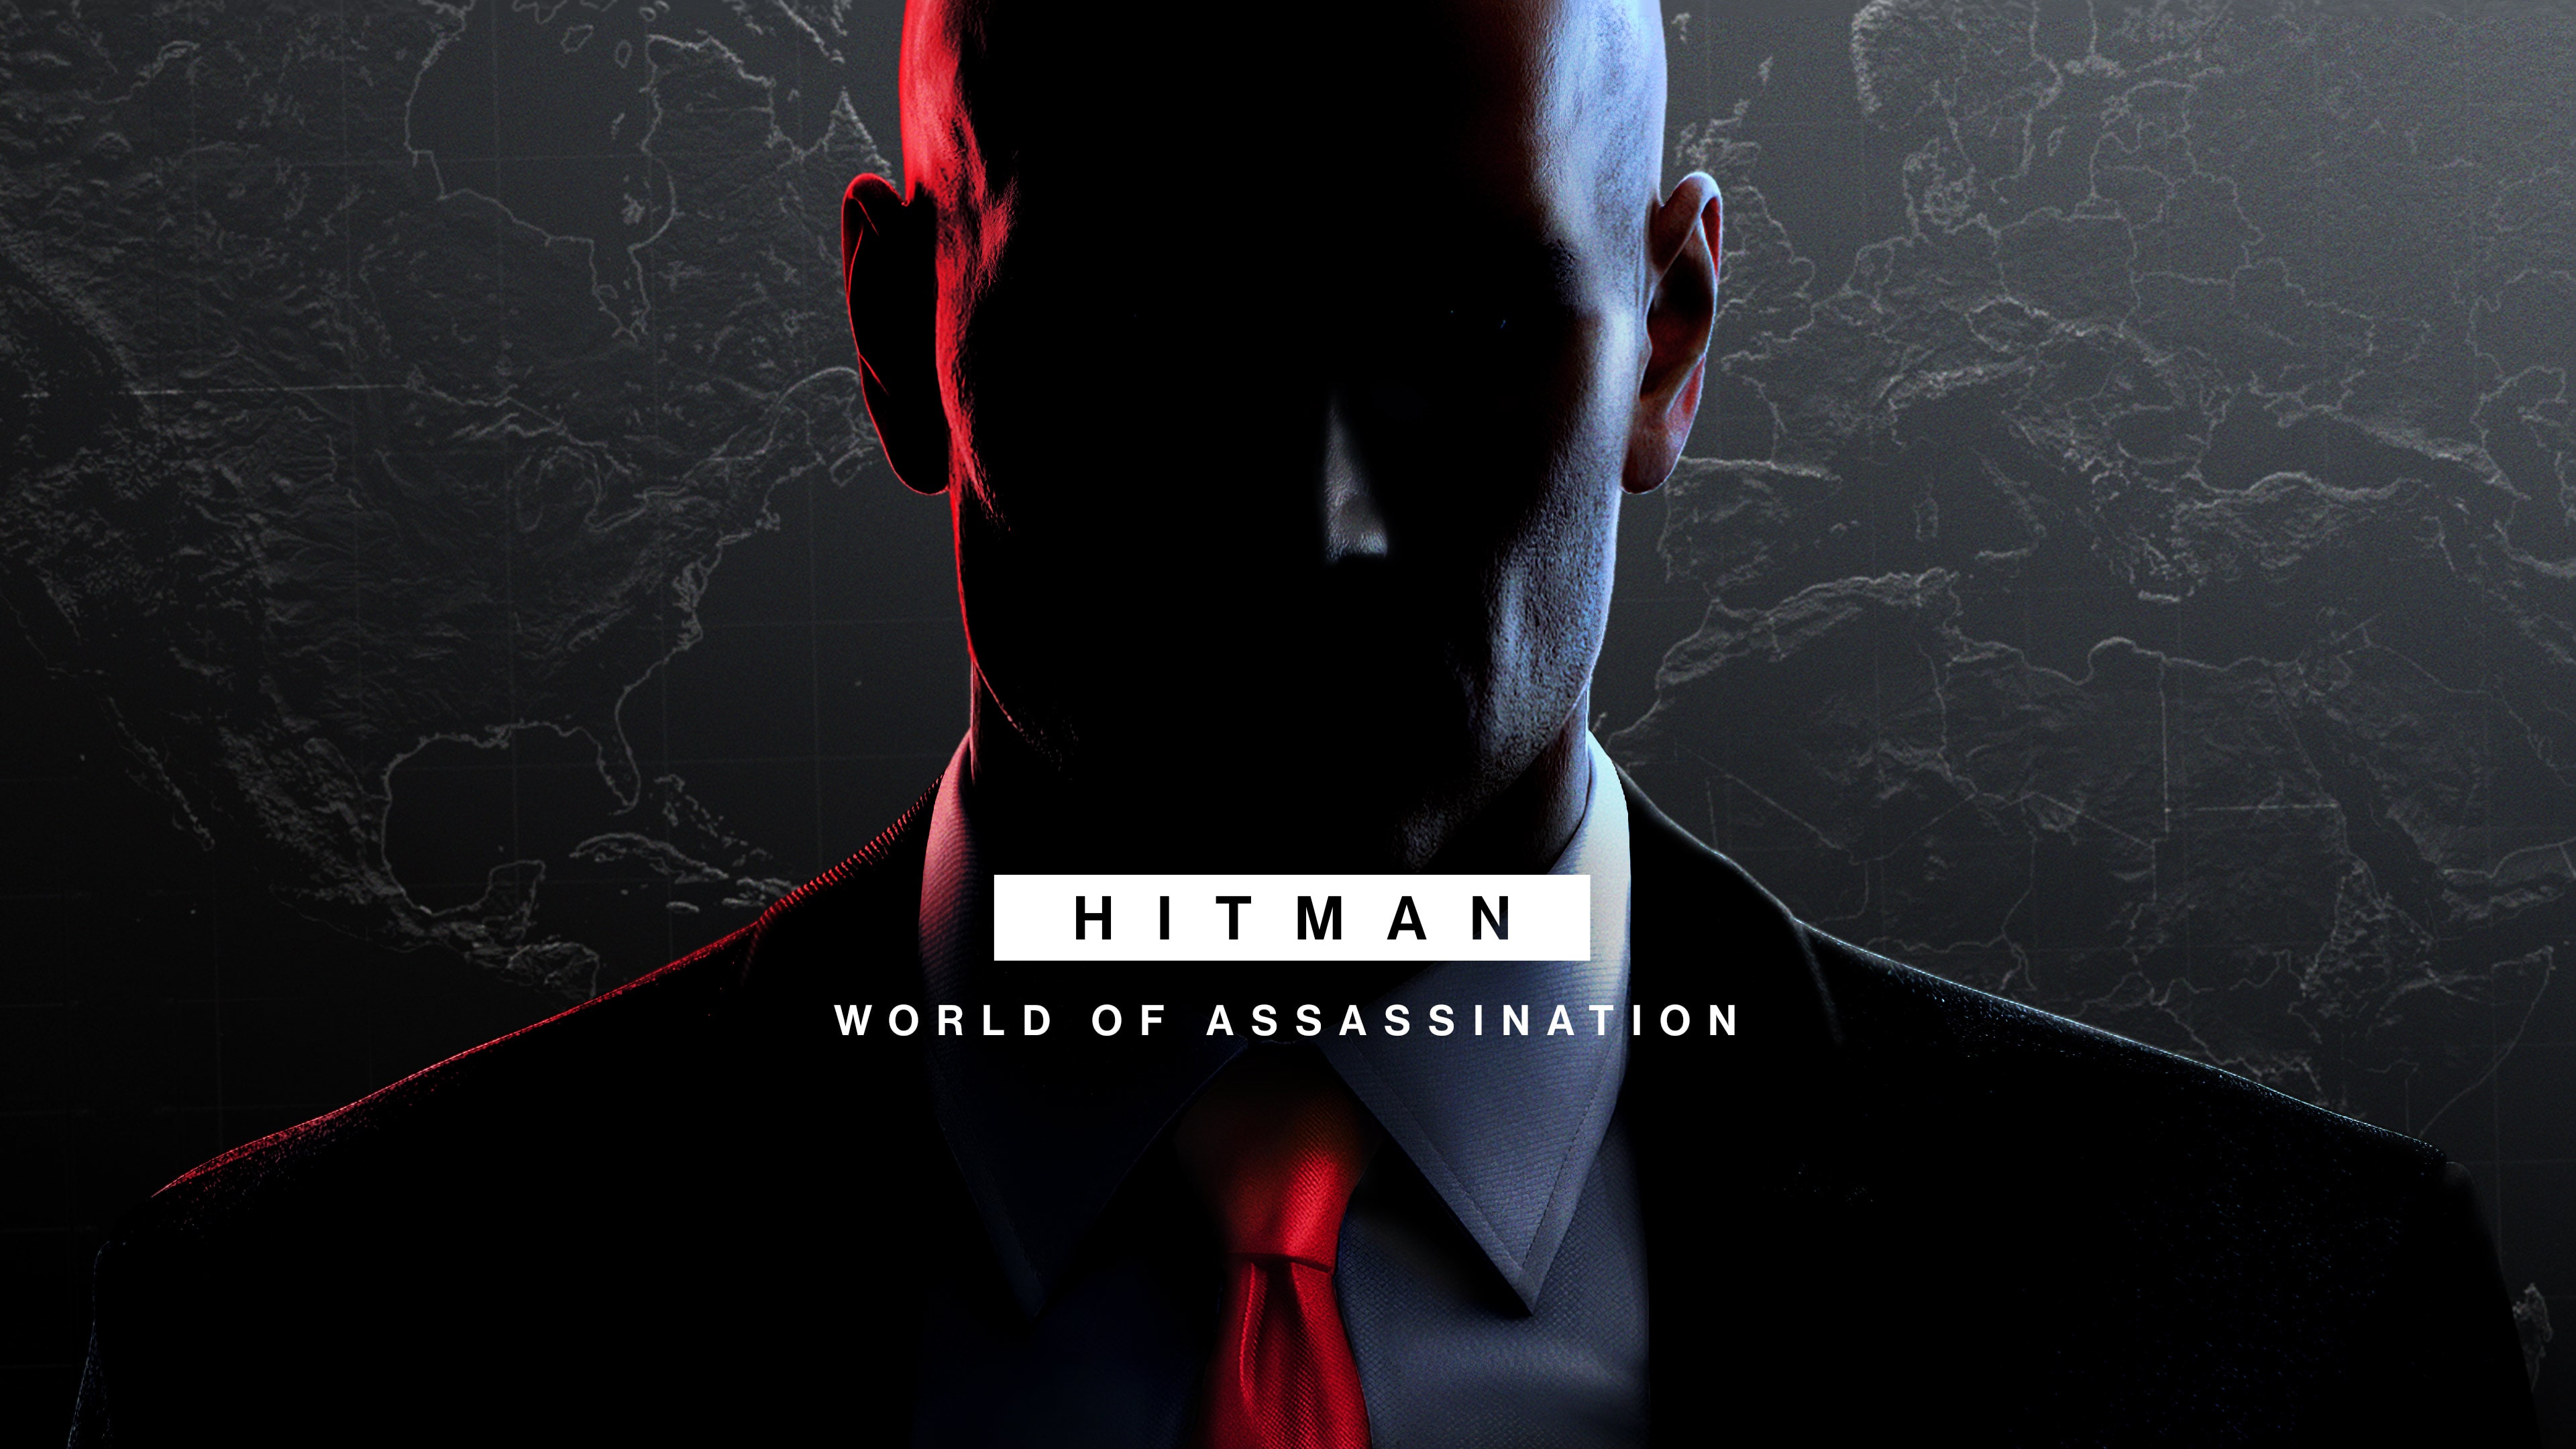 Hitman World of Assassination - Giochi per PS4 e PS5 | PlayStation (Italia)